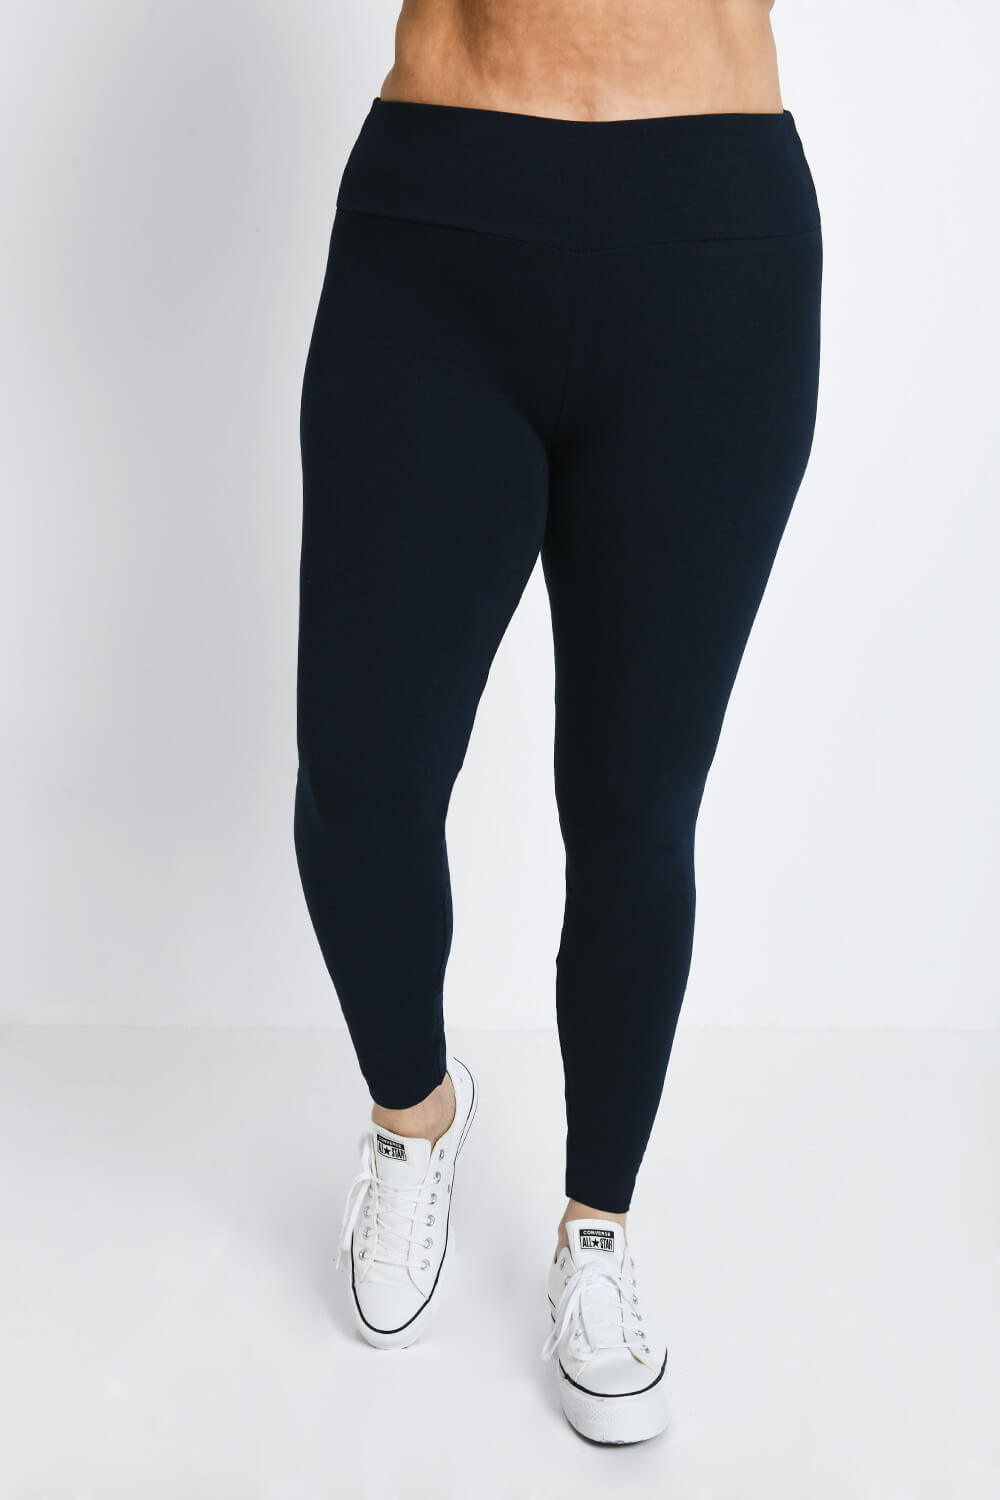 Buy Navy Blue Leggings for Women by Plus Size Online | Ajio.com